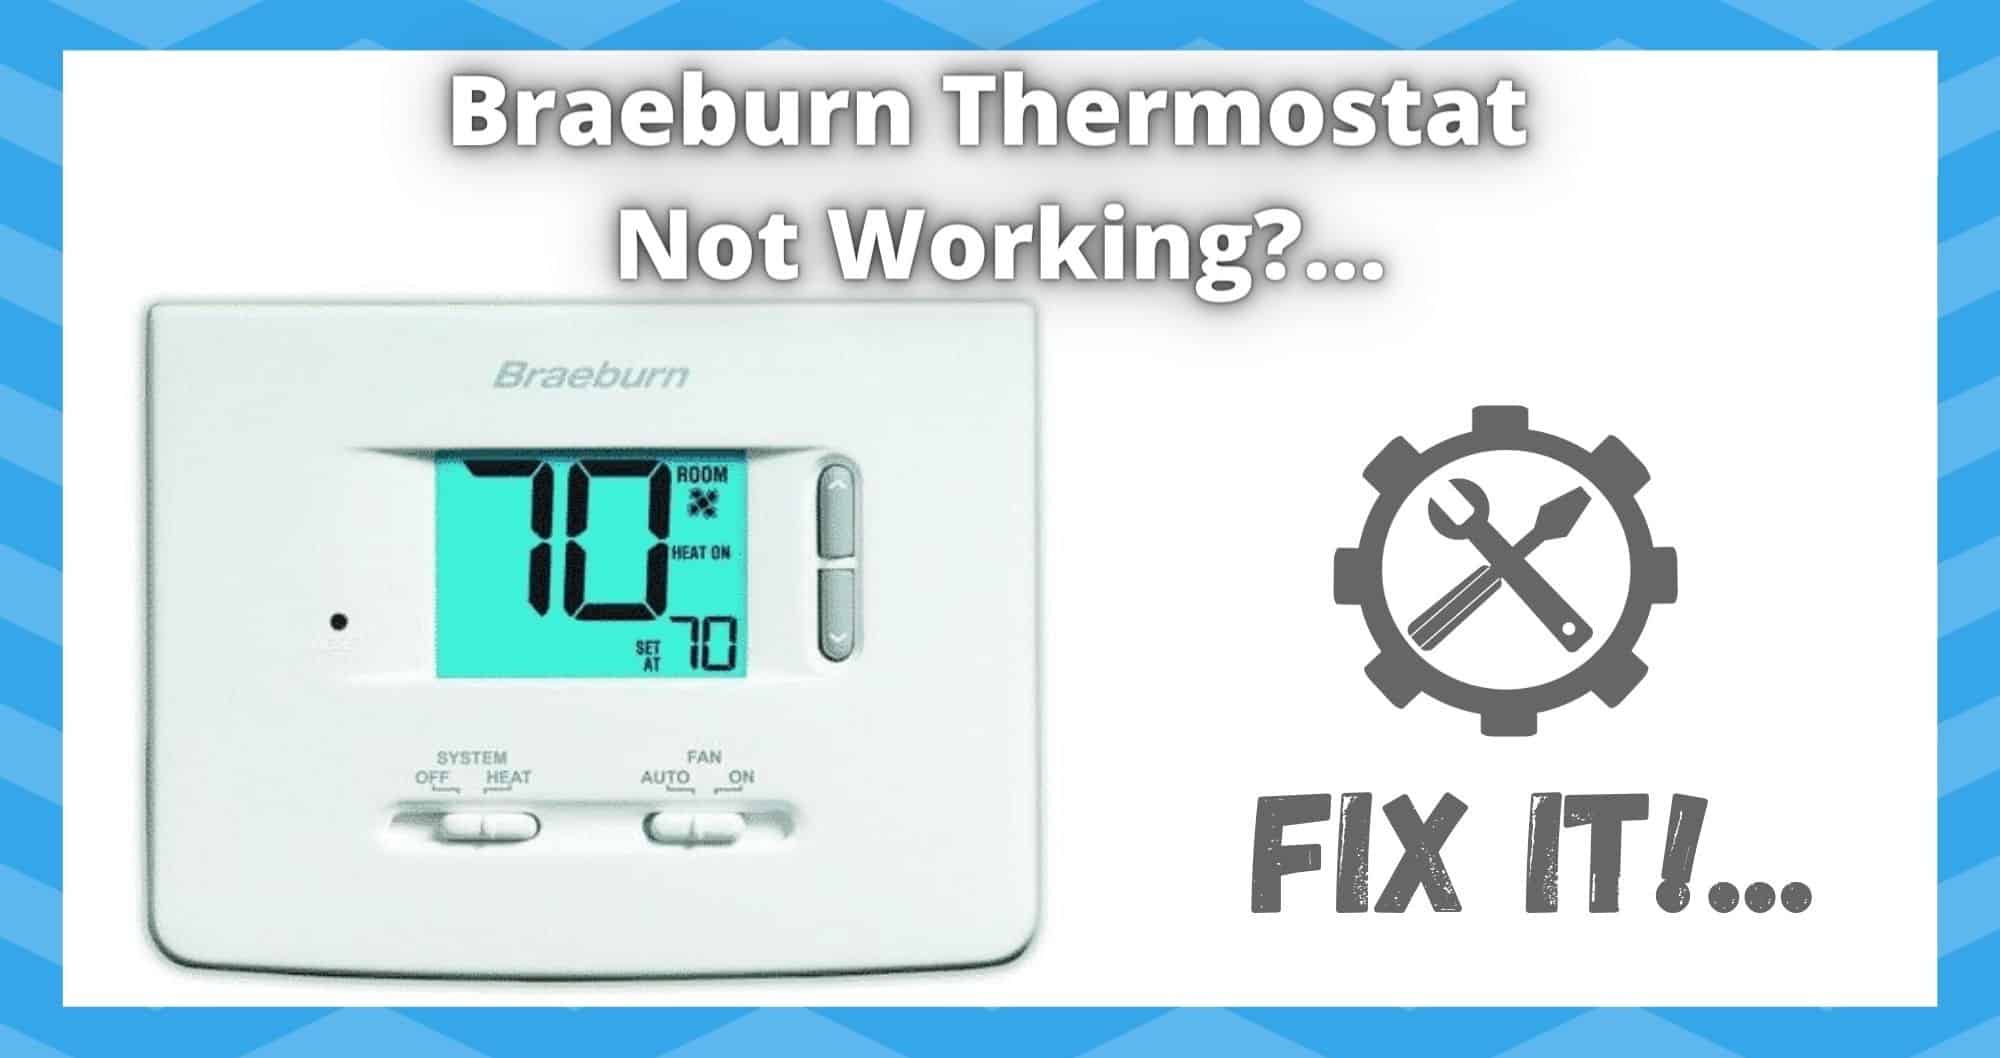 Braeburn Thermostat Not Working